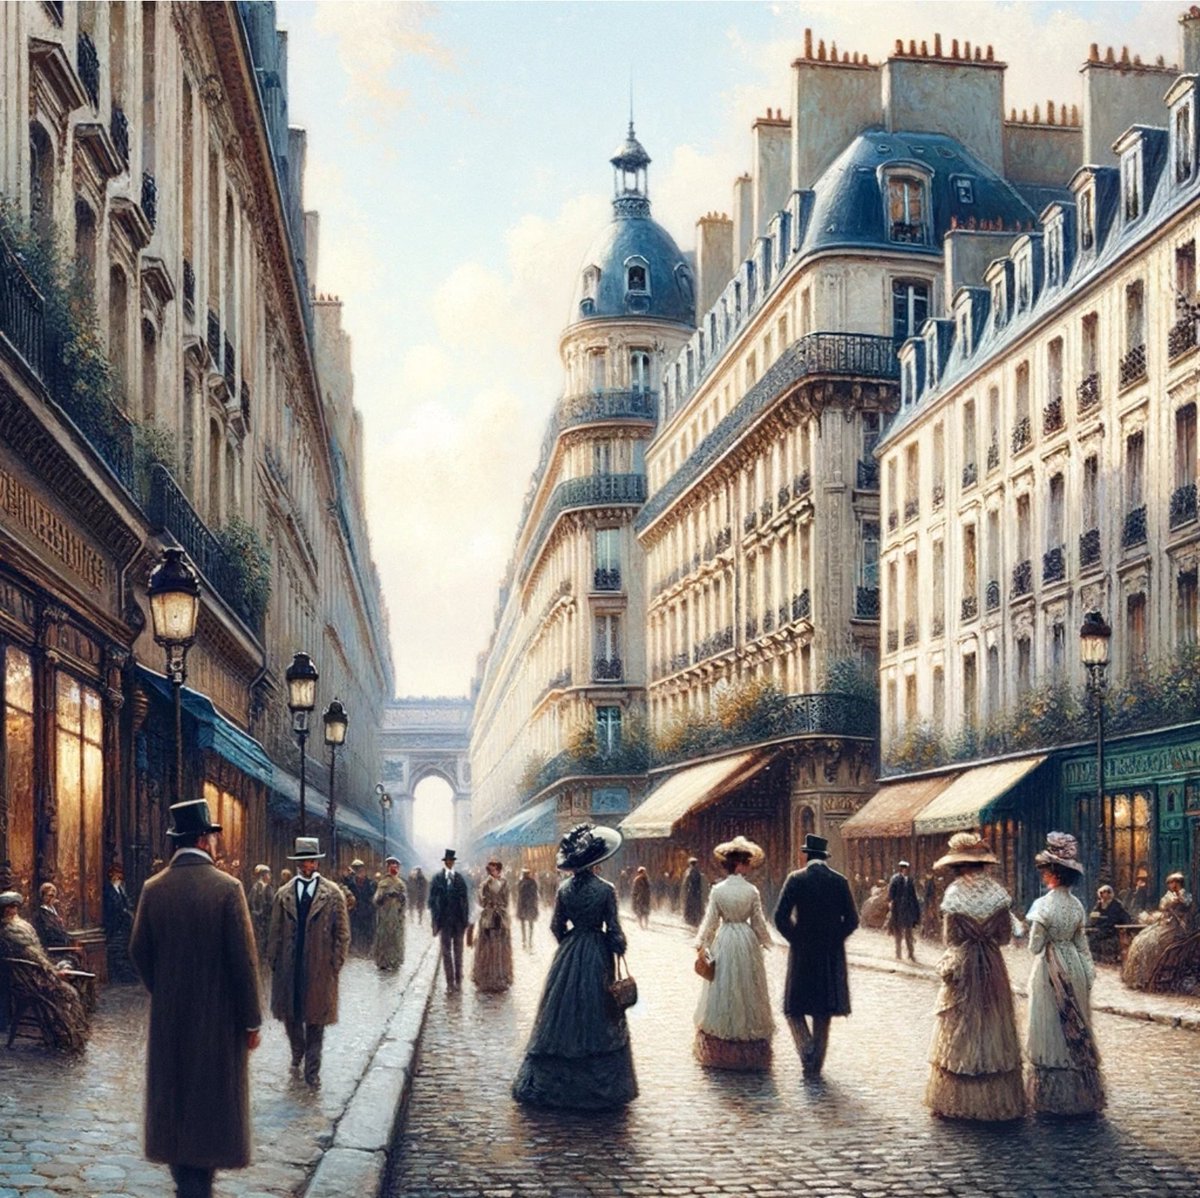 Paris 18th Century
#art #artist #artwork #drawing #painting #artlover #ArtLovers #wow #dream #Paris #France #Frankreich #18thCentury